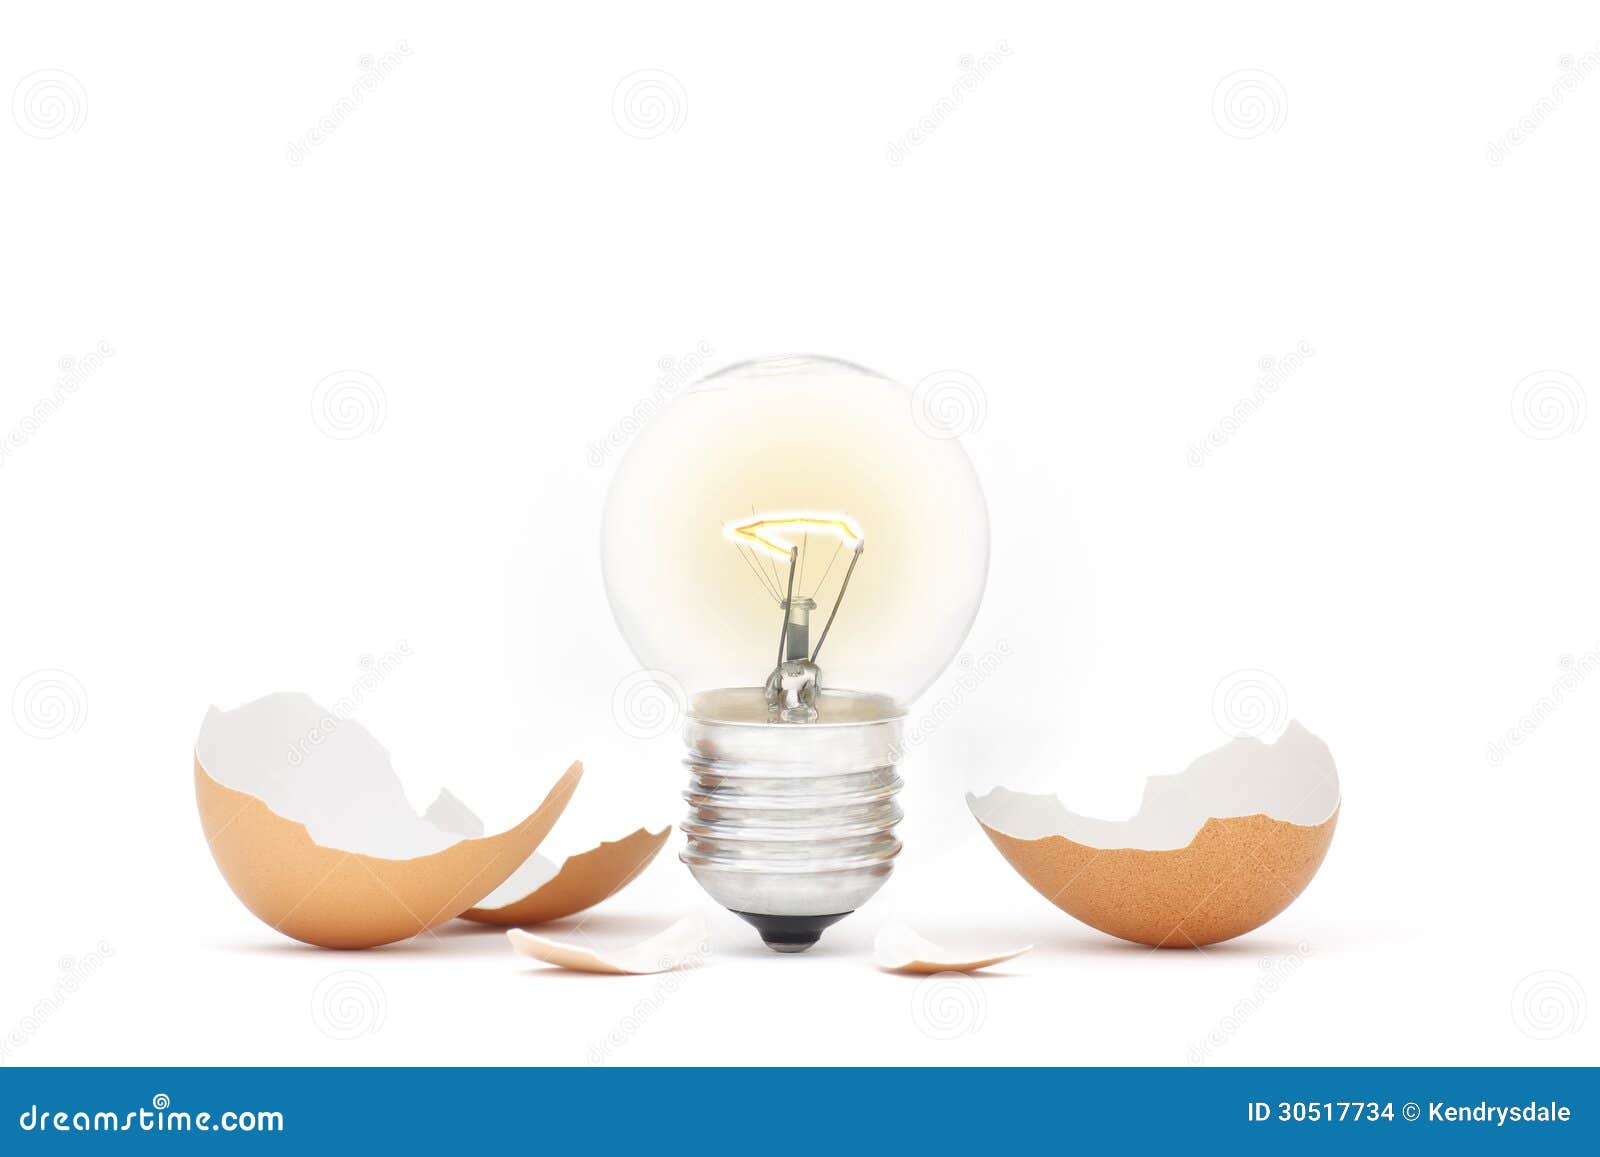 innovation - ideas light bulb hatching